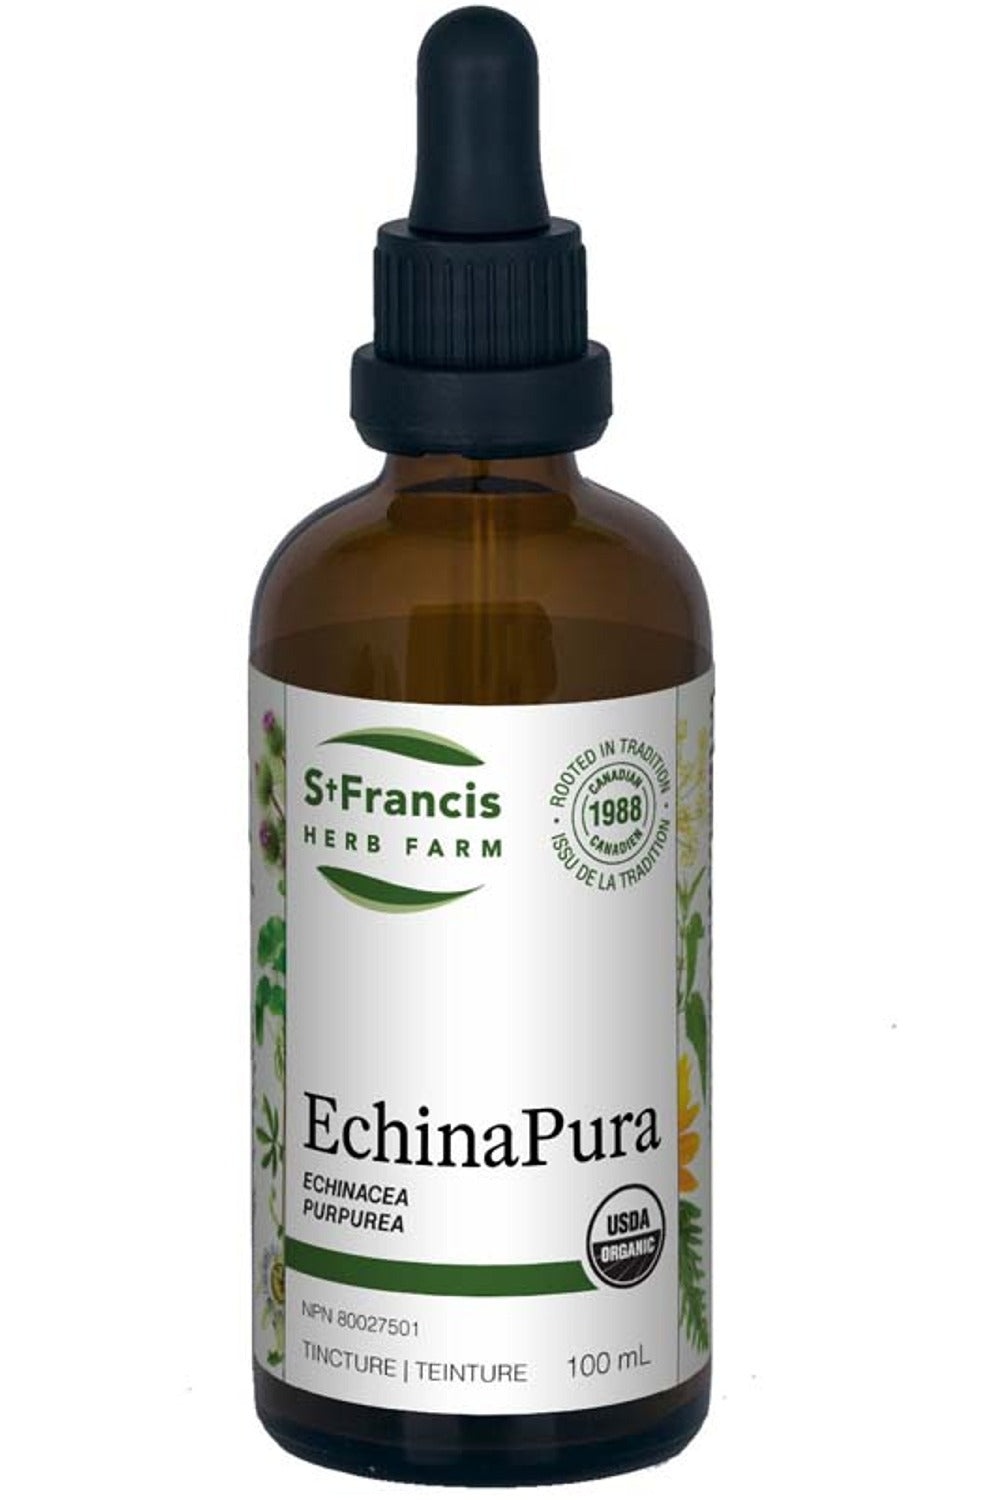 ST FRANCIS HERB FARM Echinapura (100 ml)